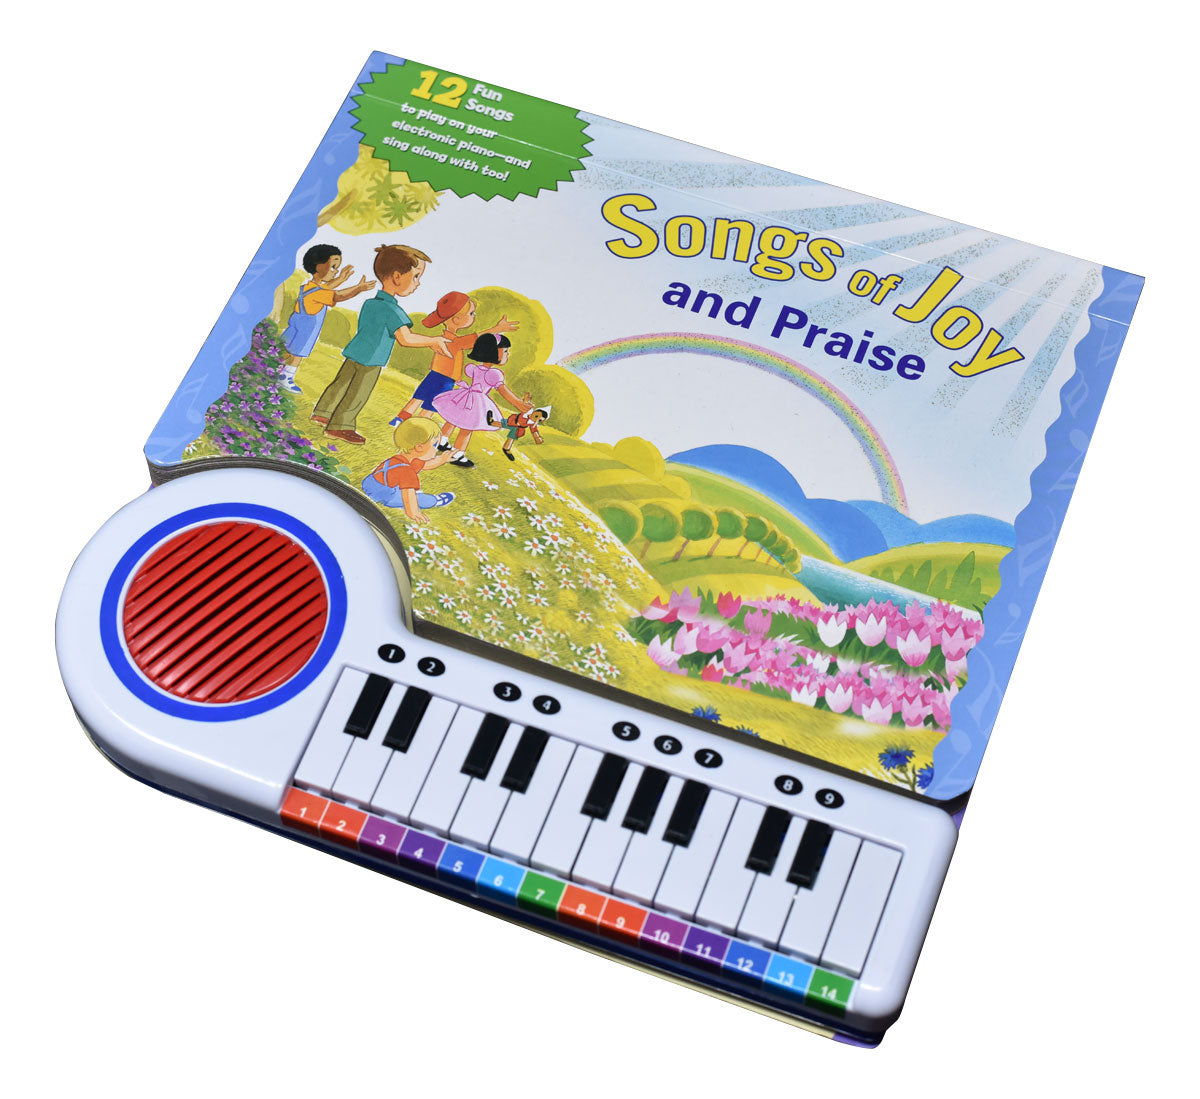 Songs Of Joy And Praise (St. Joseph Piano Book)